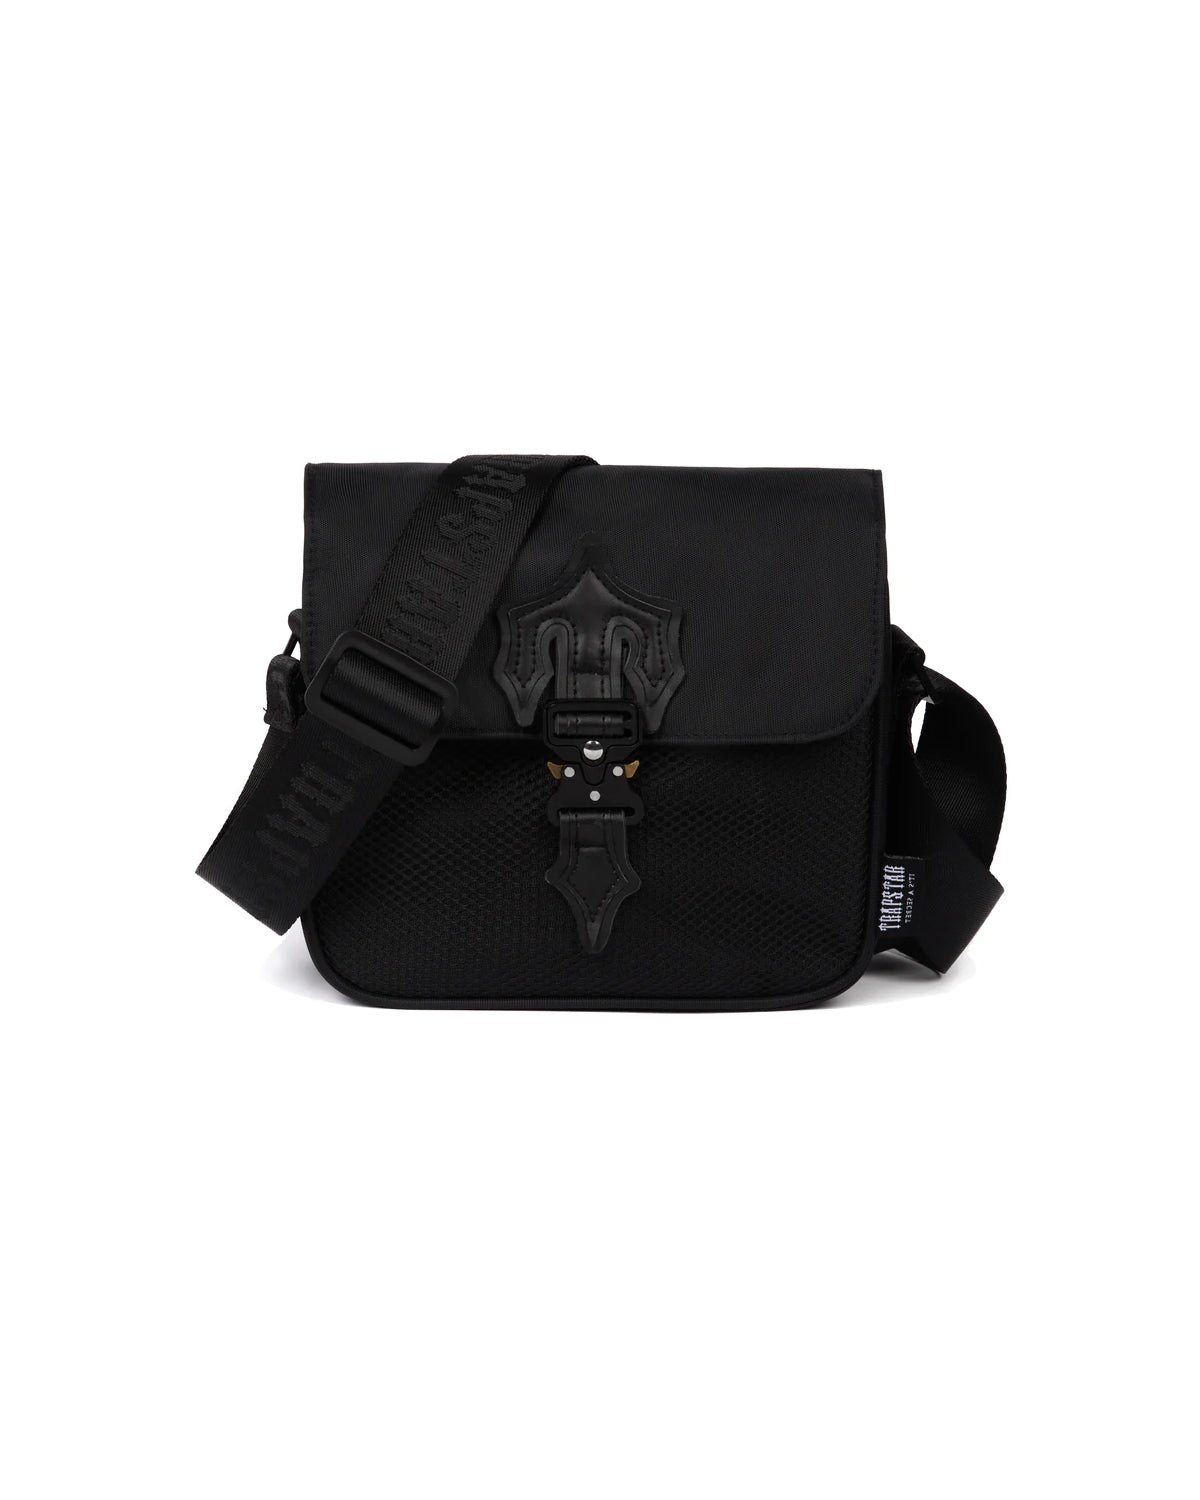 Irongate T Cross Body Bag - Black Edition